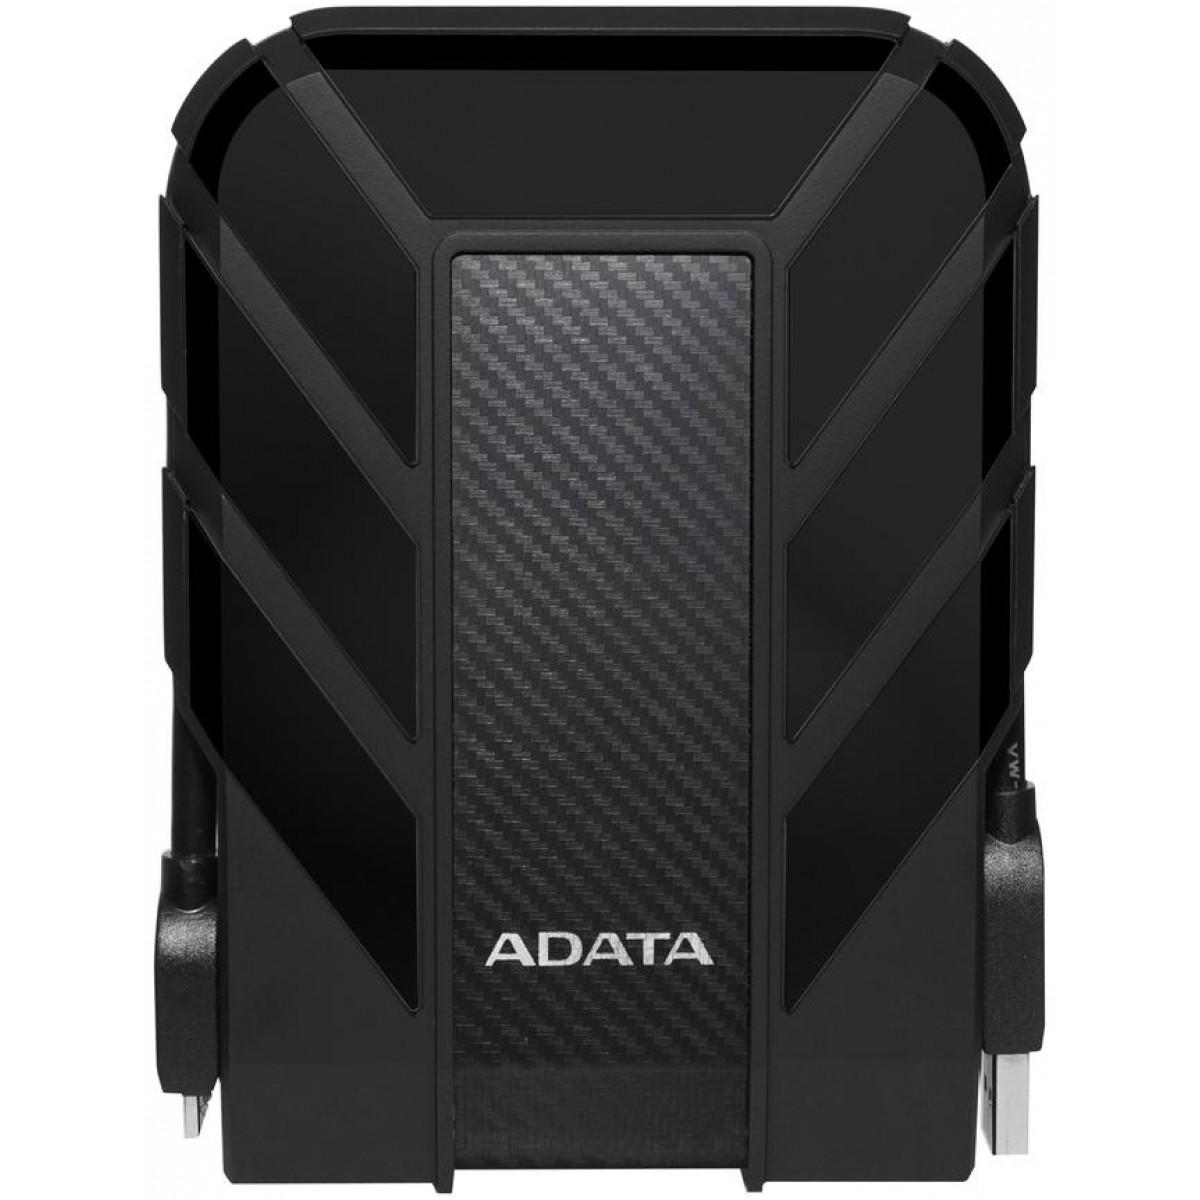 HD Externo Portátil Adata HD710 Pro 2TB, USB 3.2, Black, AHD710P-2TU31-CBK